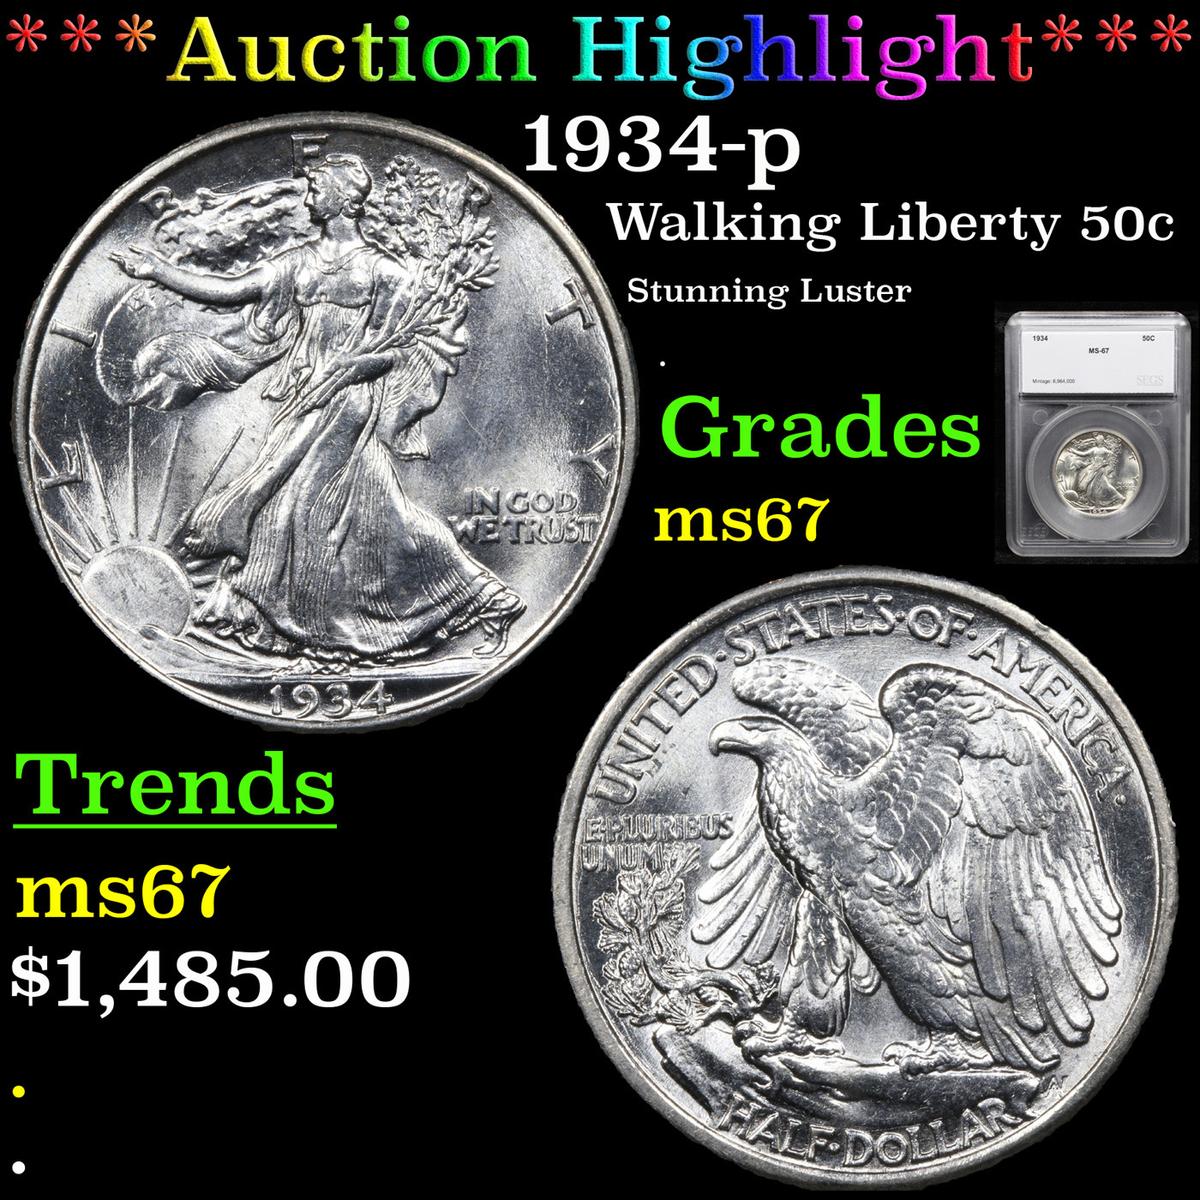 ***Auction Highlight*** 1934-p Walking Liberty Half Dollar 50c Graded ms67 By SEGS (fc)